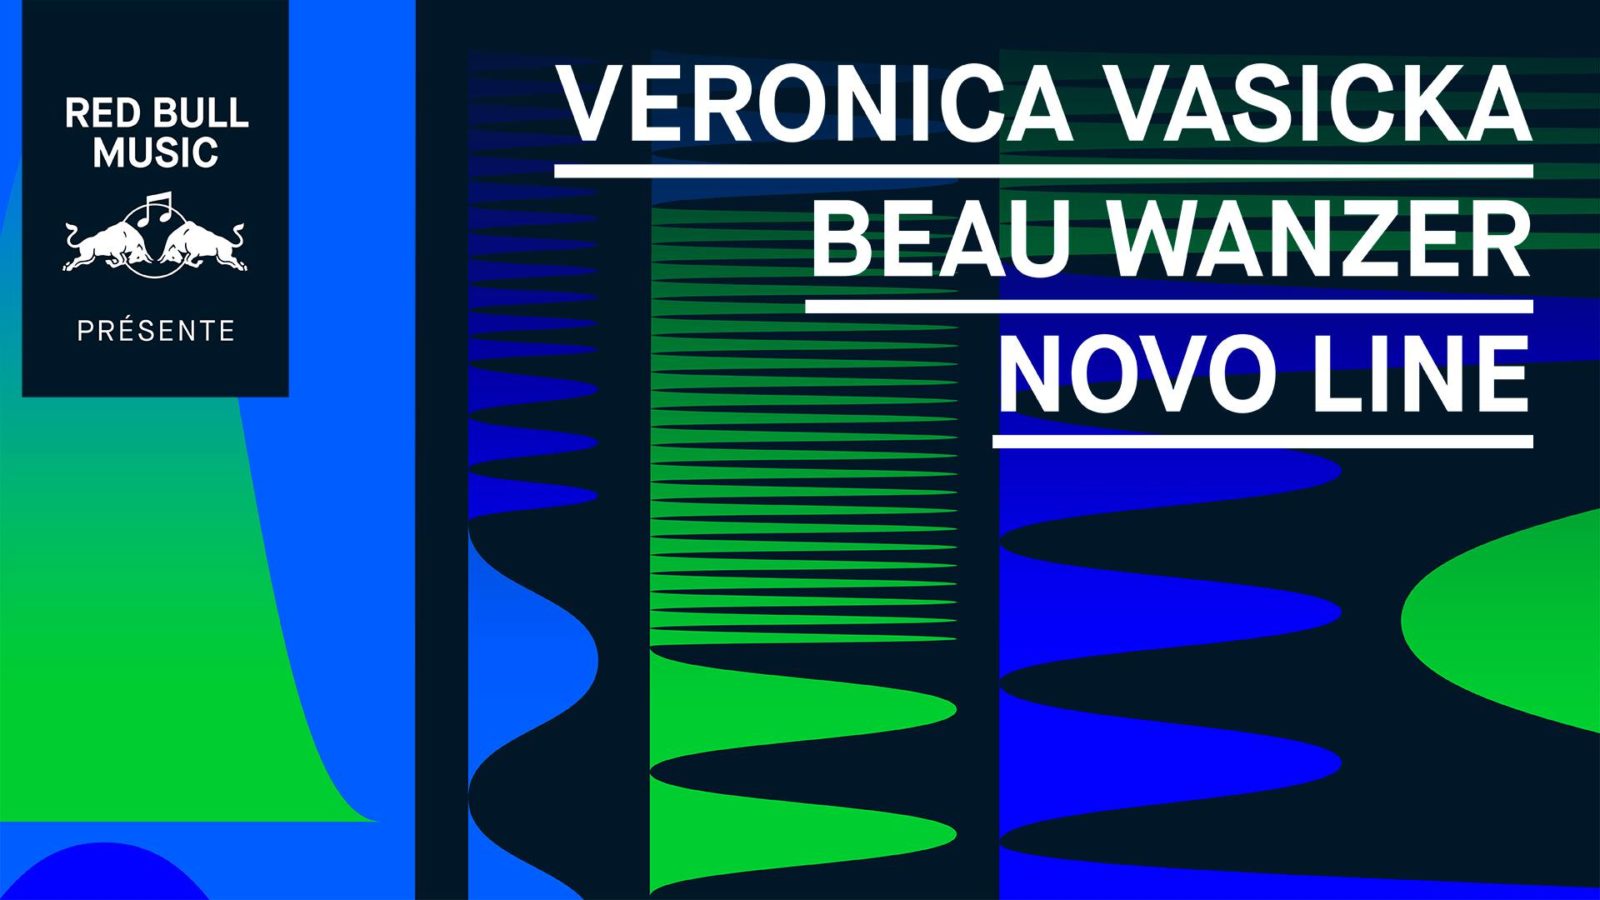 [Soirée] Red Bull Music w/ Veronica Vasicka, Beau Wanzer, Novo Line